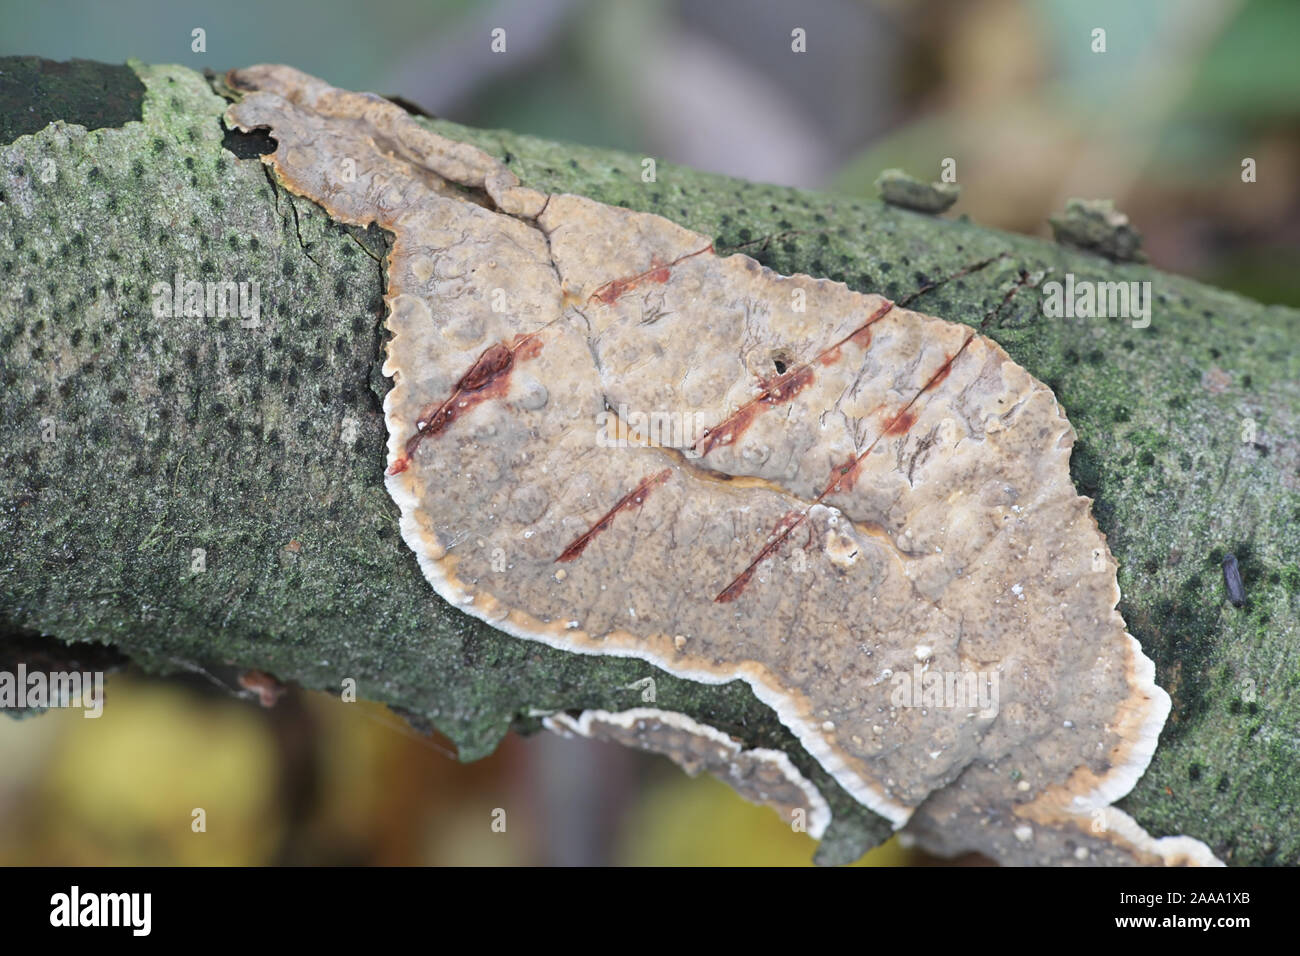 Stereum rugosum, known as bleeding broadleaf crust, wild fungi from Finland Stock Photo